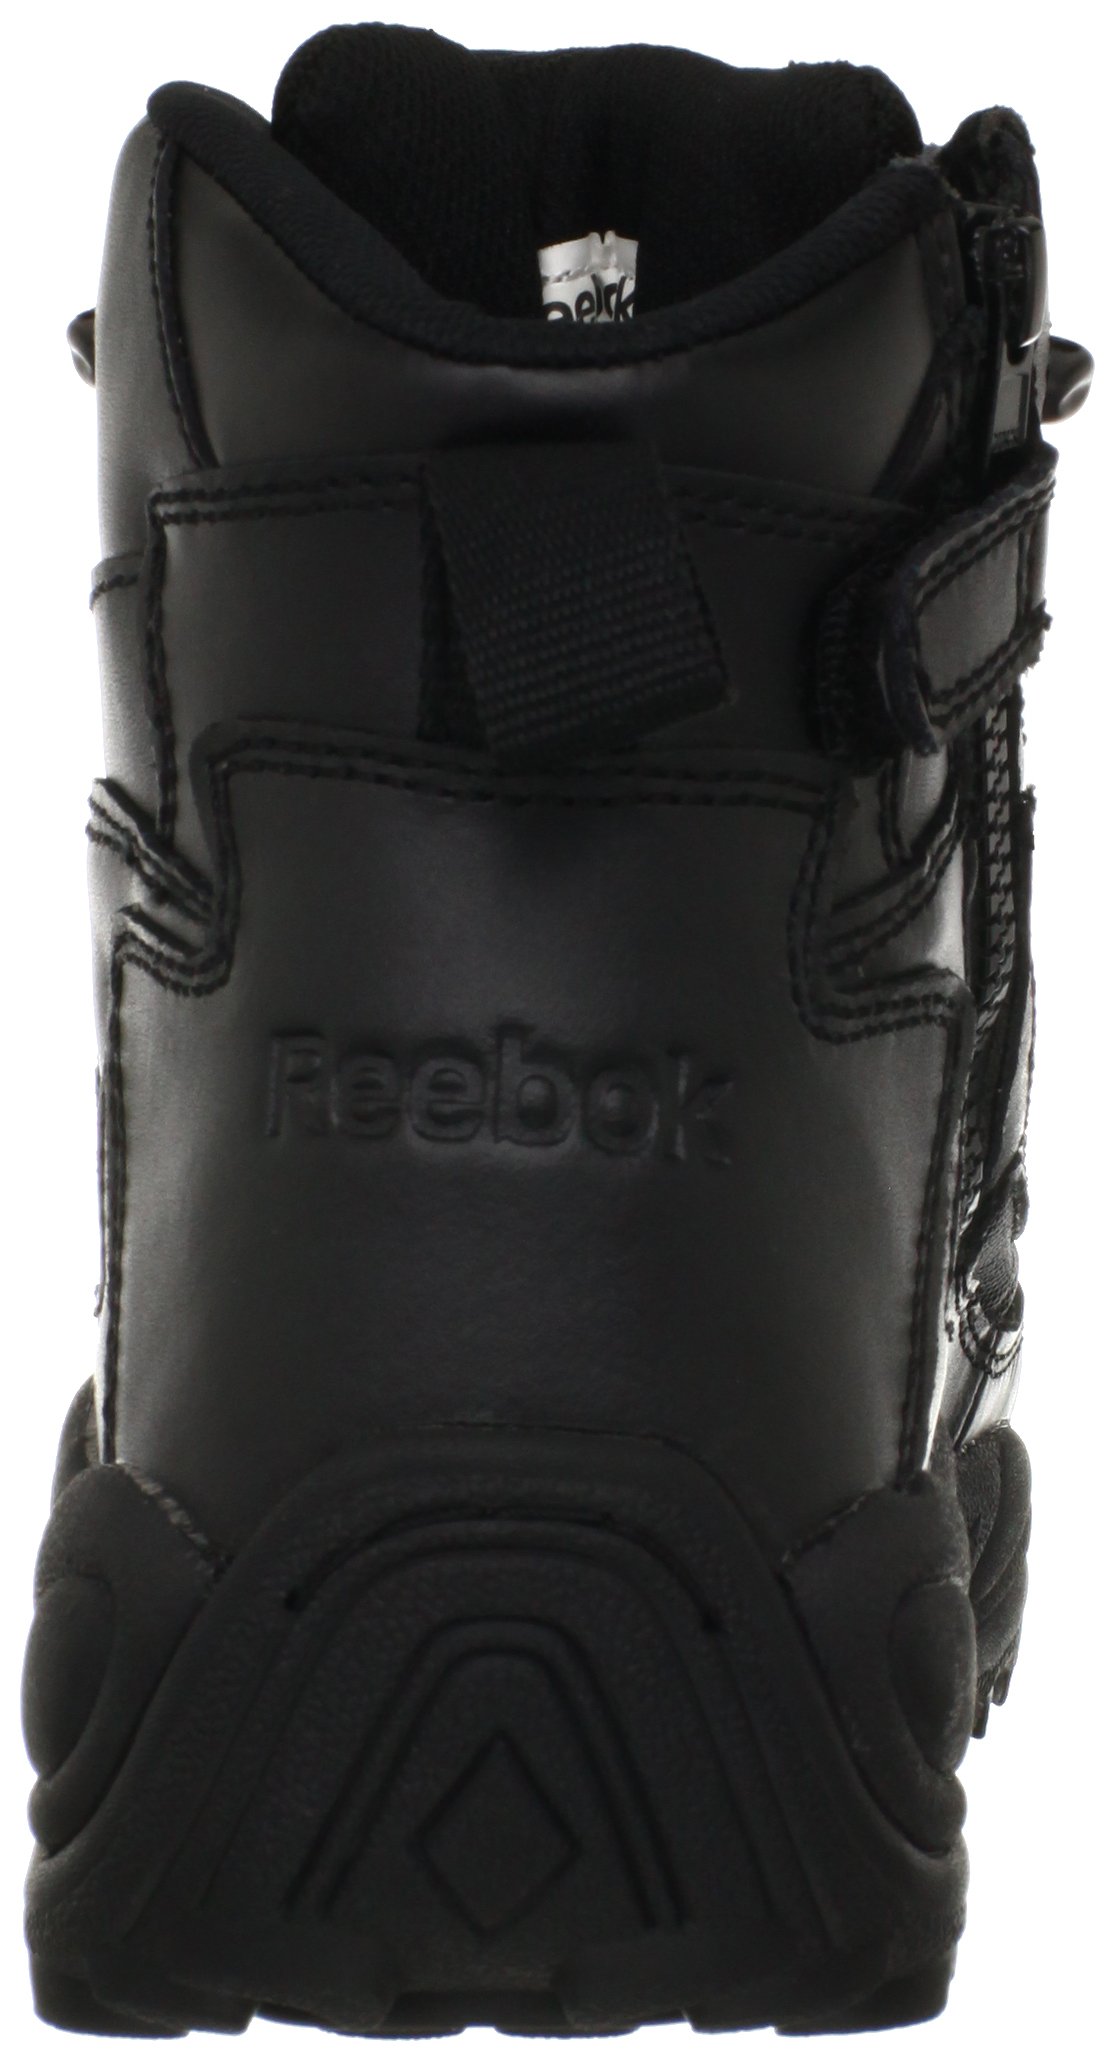 Reebok Work Men's Rapid Response RB8678 Safety Boot,Black